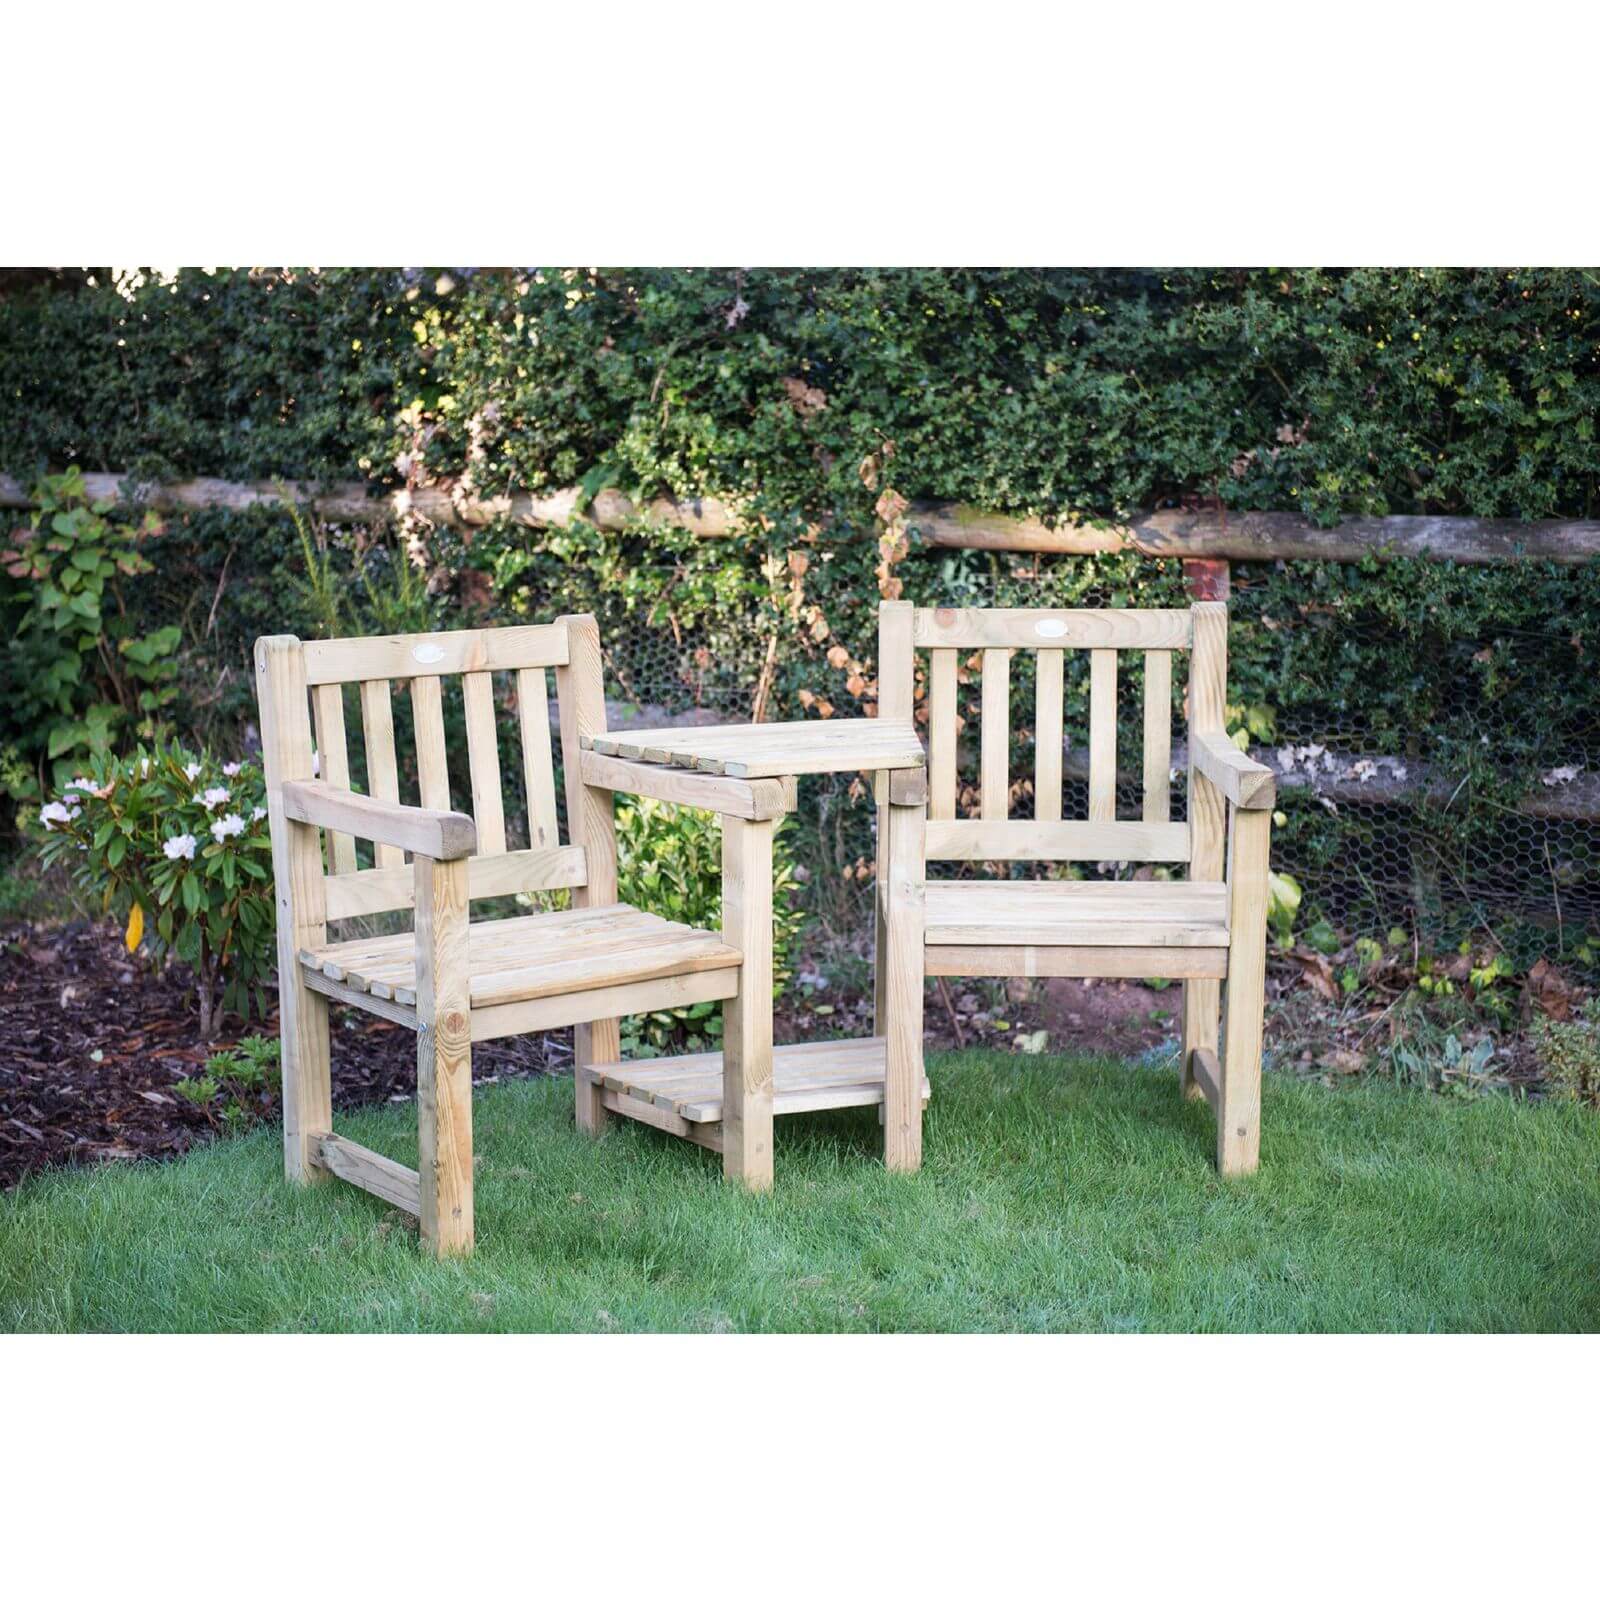 Harvington Wooden Companion Seat